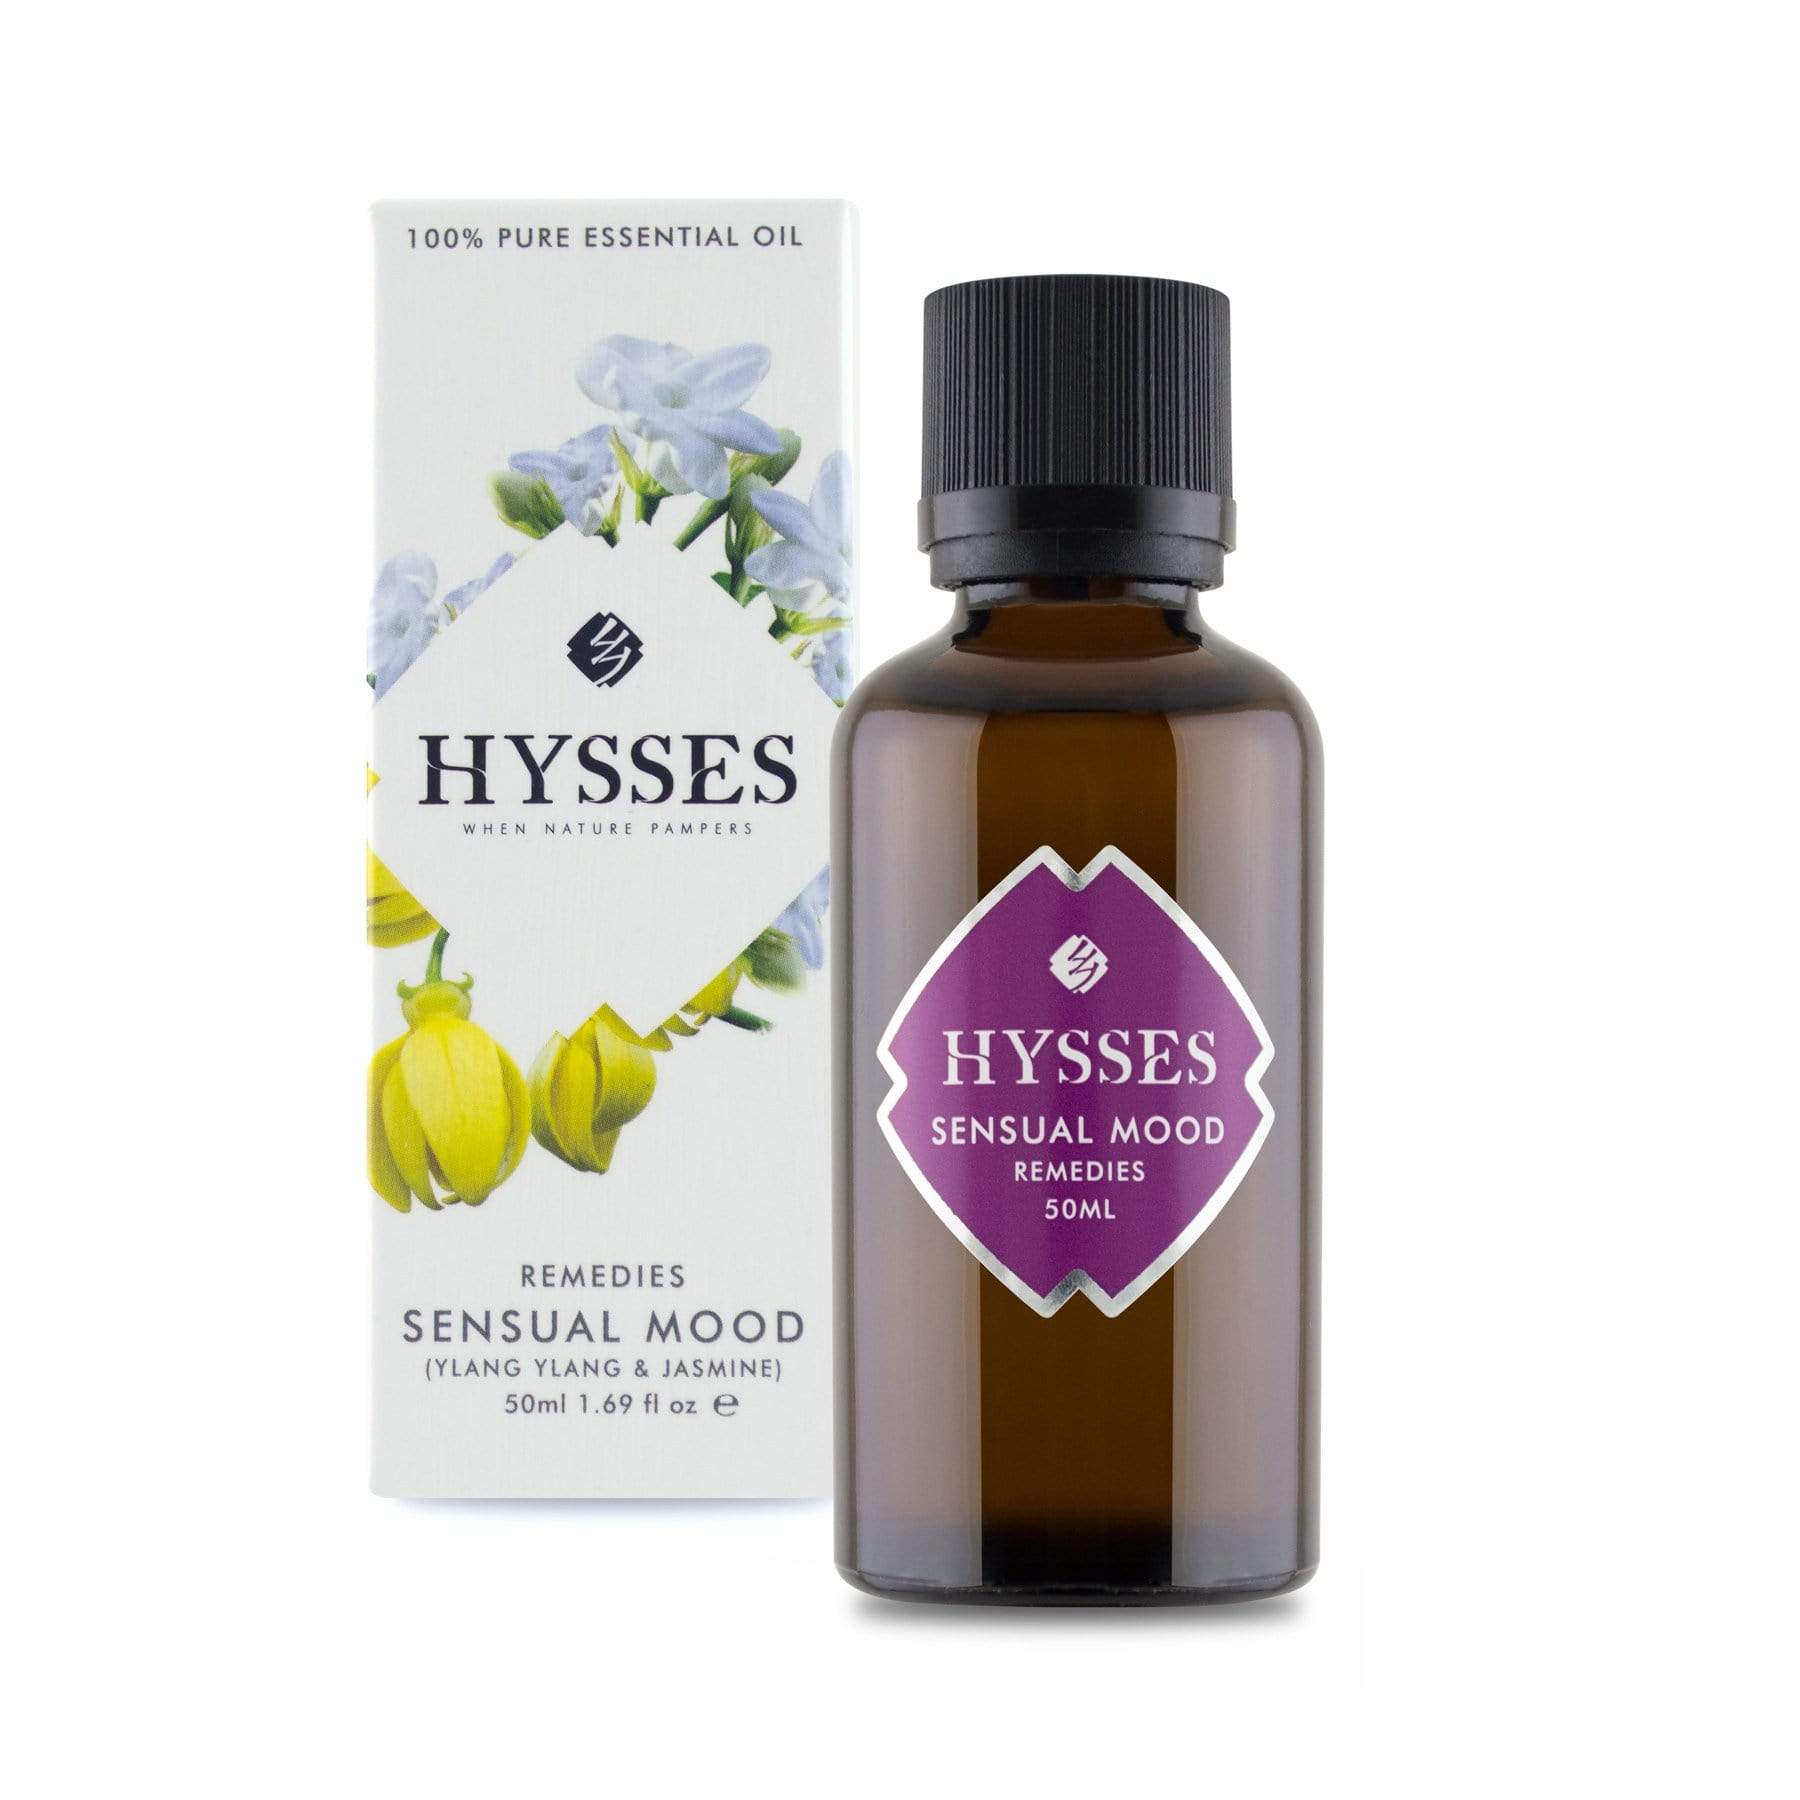 Hysses Essential Oil Remedies, Sensual Mood (Ylang Ylang & Jasmine), 50ml